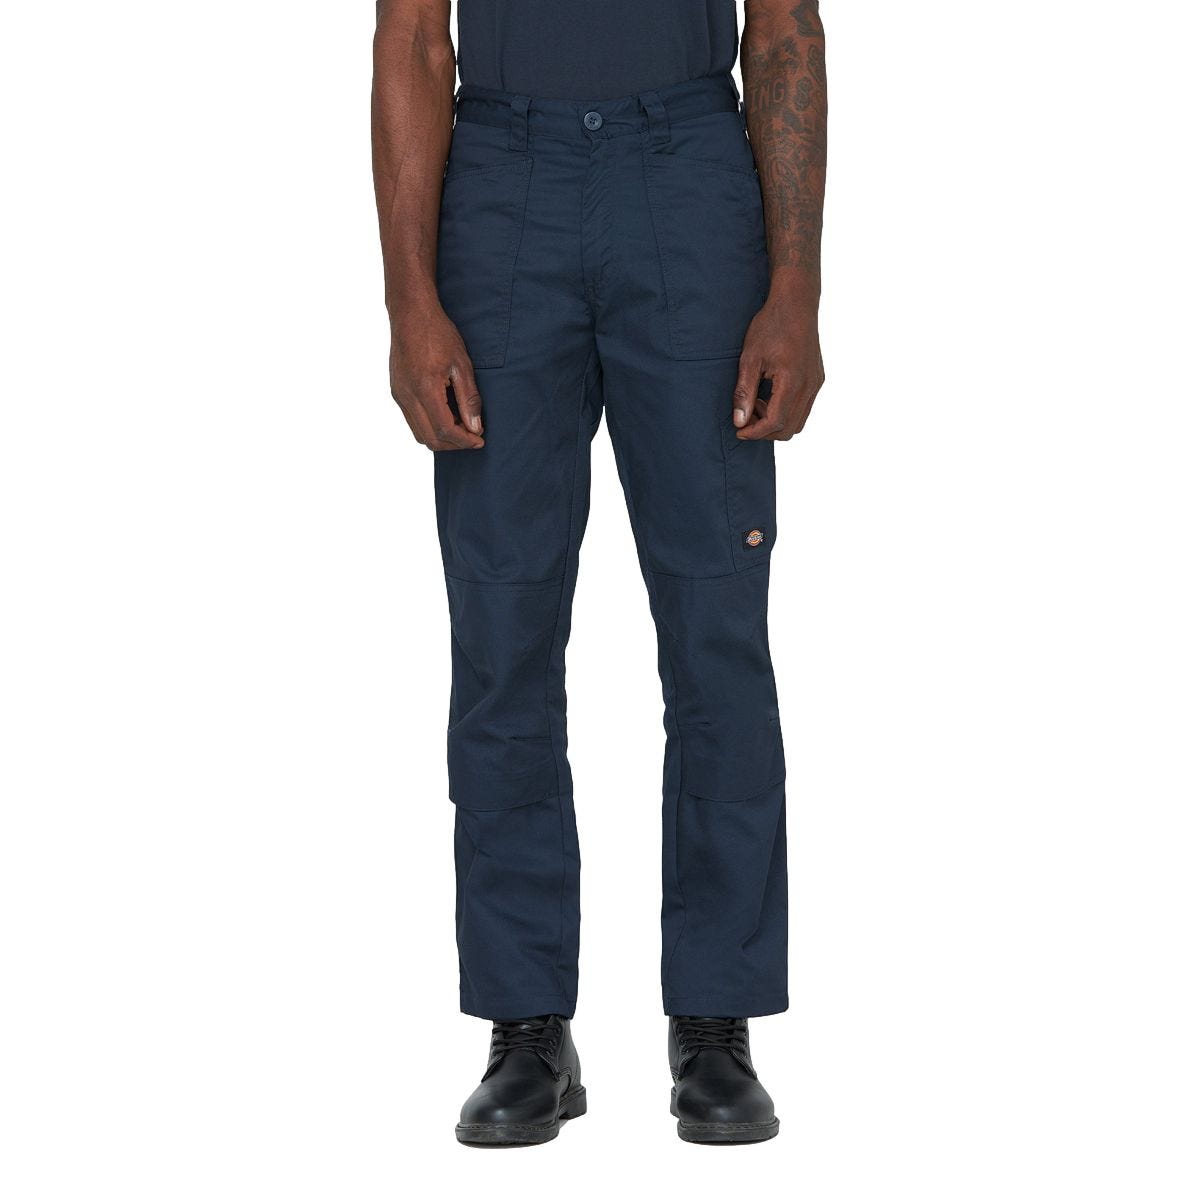 Pantalon de travail Action Flex bleu marine - Dickies - Taille 38 2